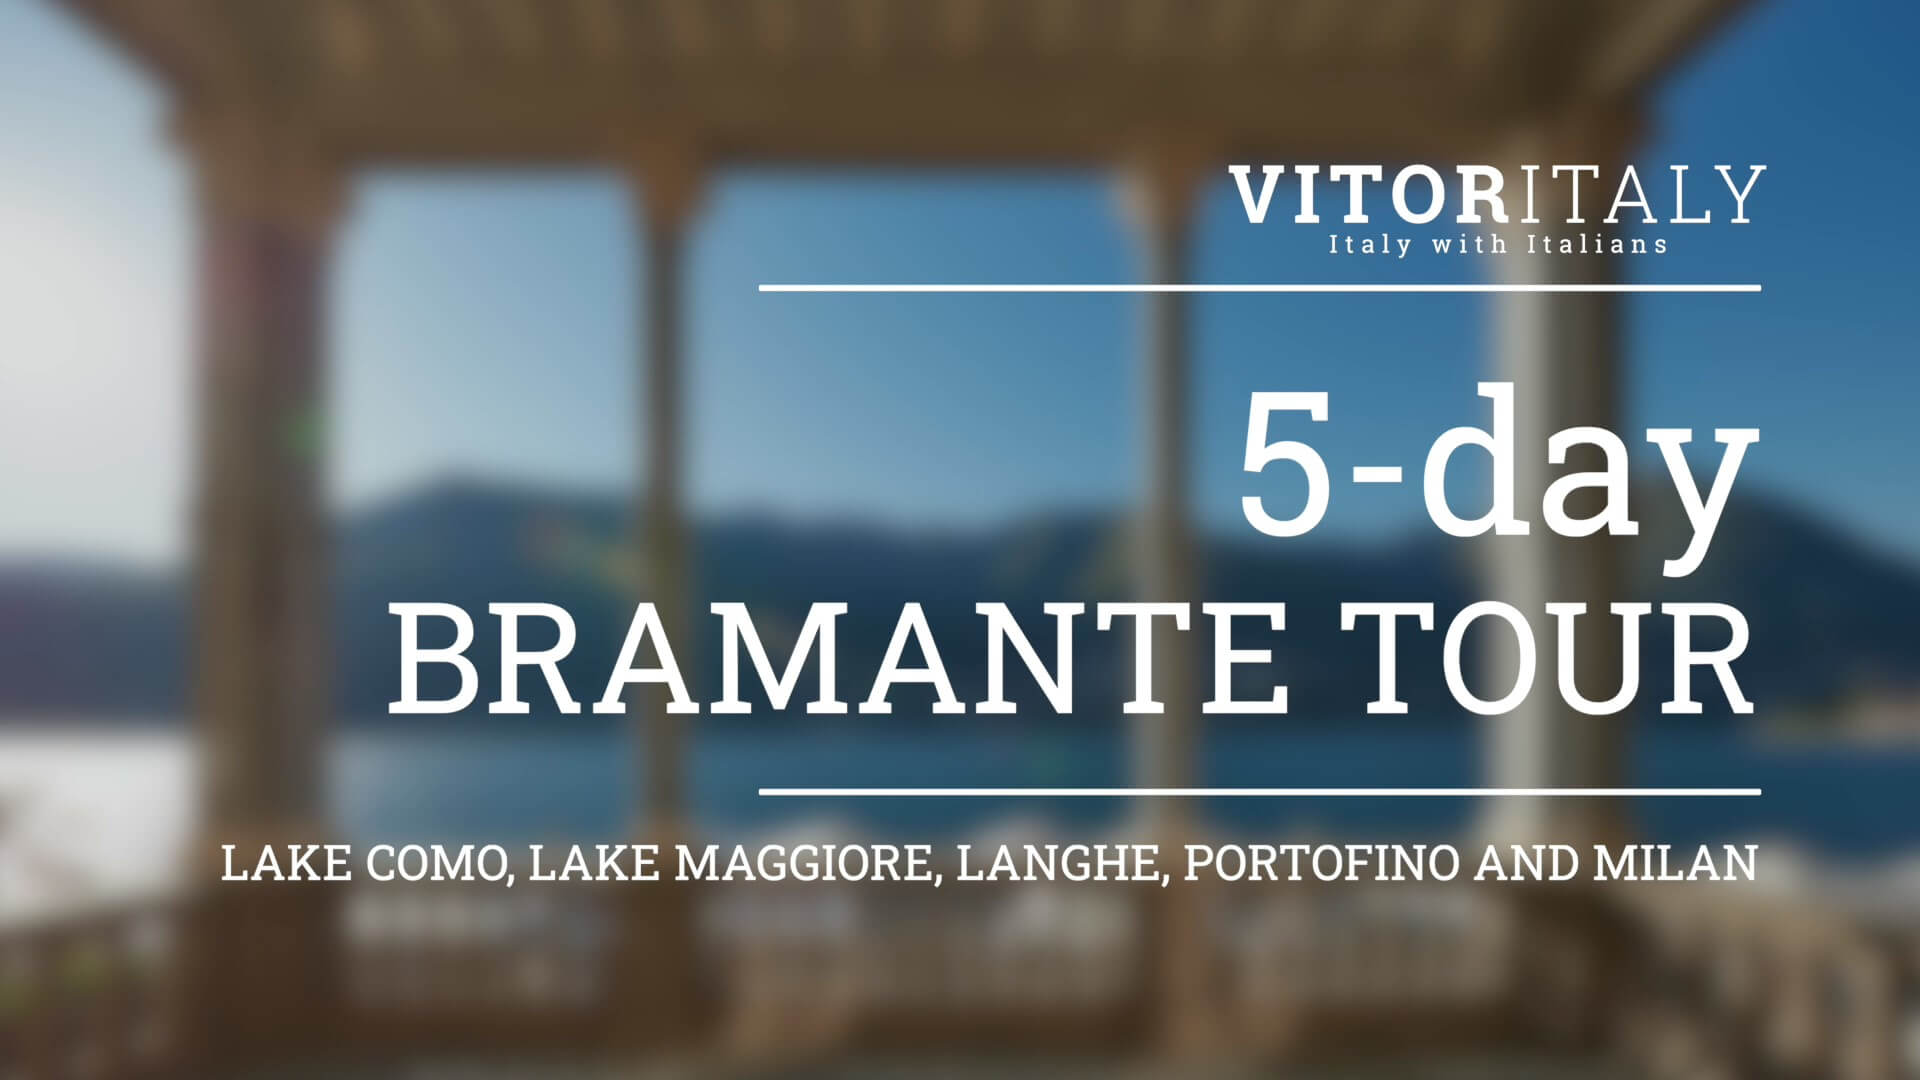 BRAMANTE TOUR - Lake Como, Lake Maggiore, Langhe,  Portofino and Milan 5 days